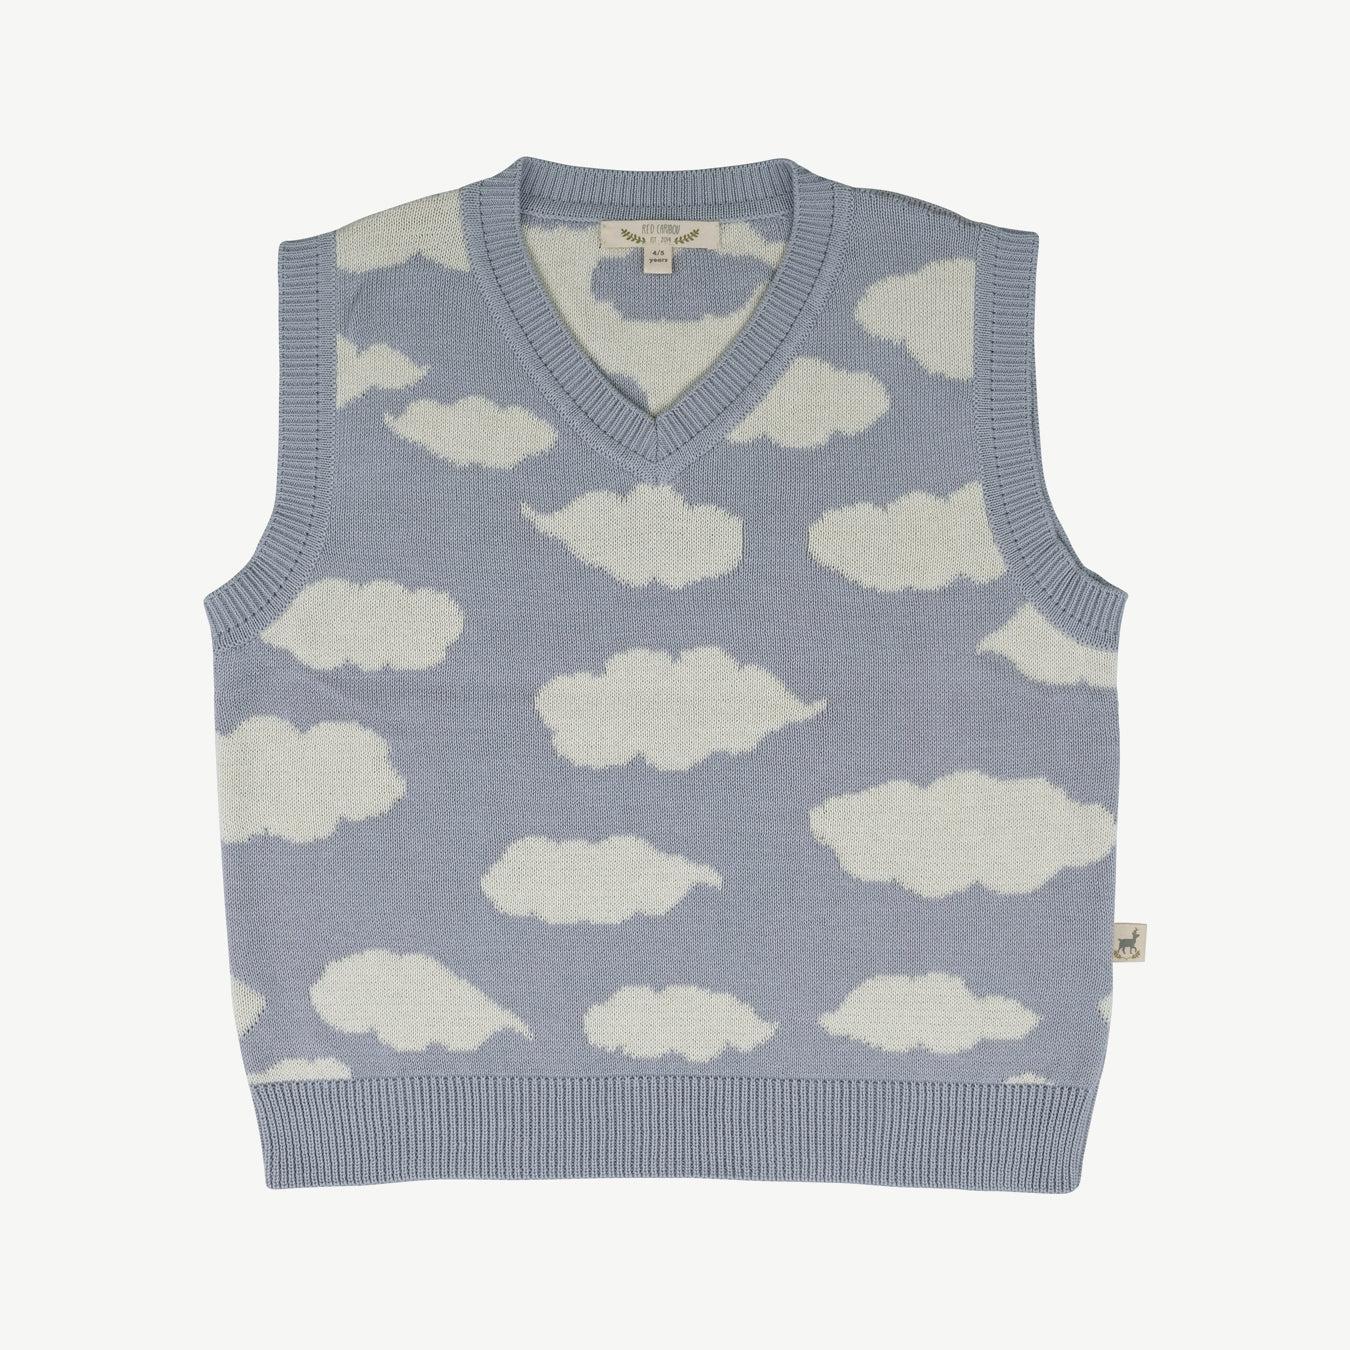 'clouds' gray knit vest